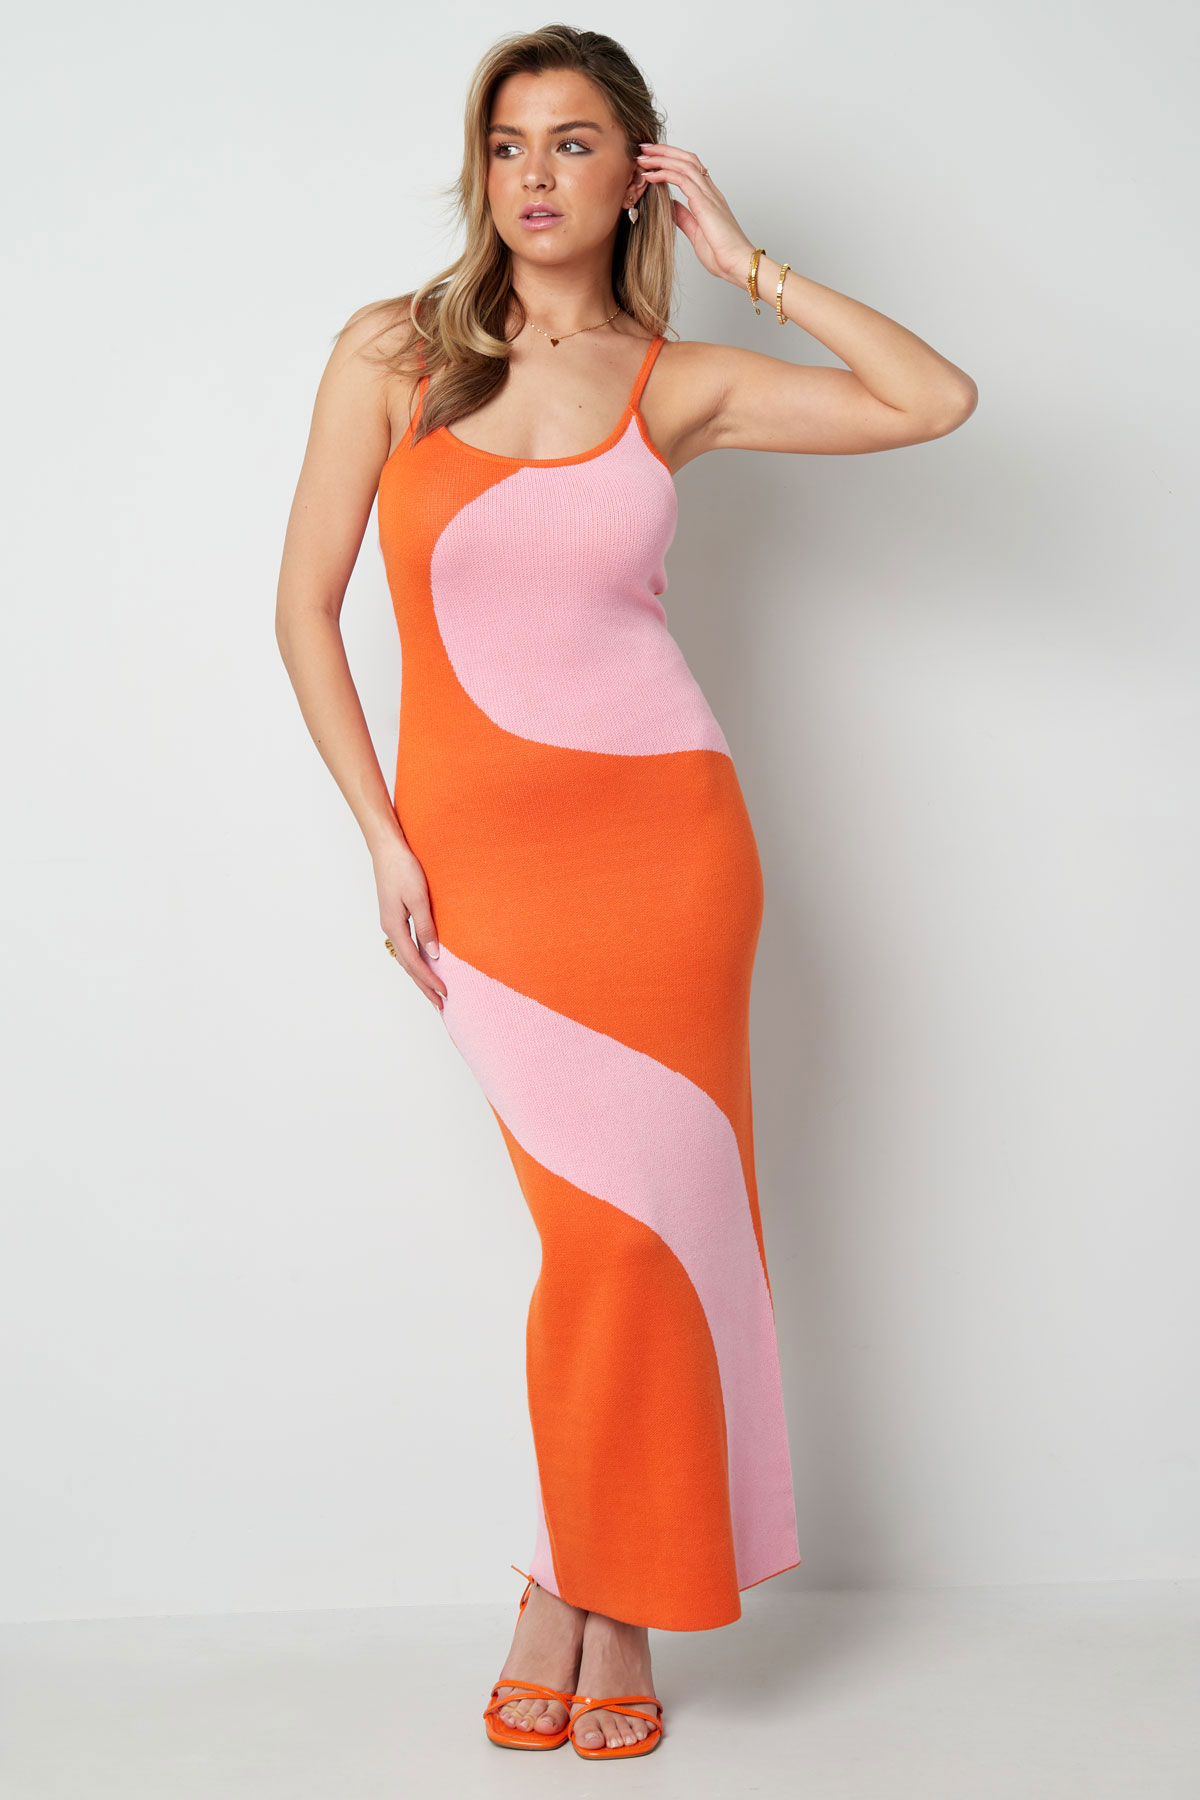 Vestido estampado orgánico - rosa naranja Imagen2